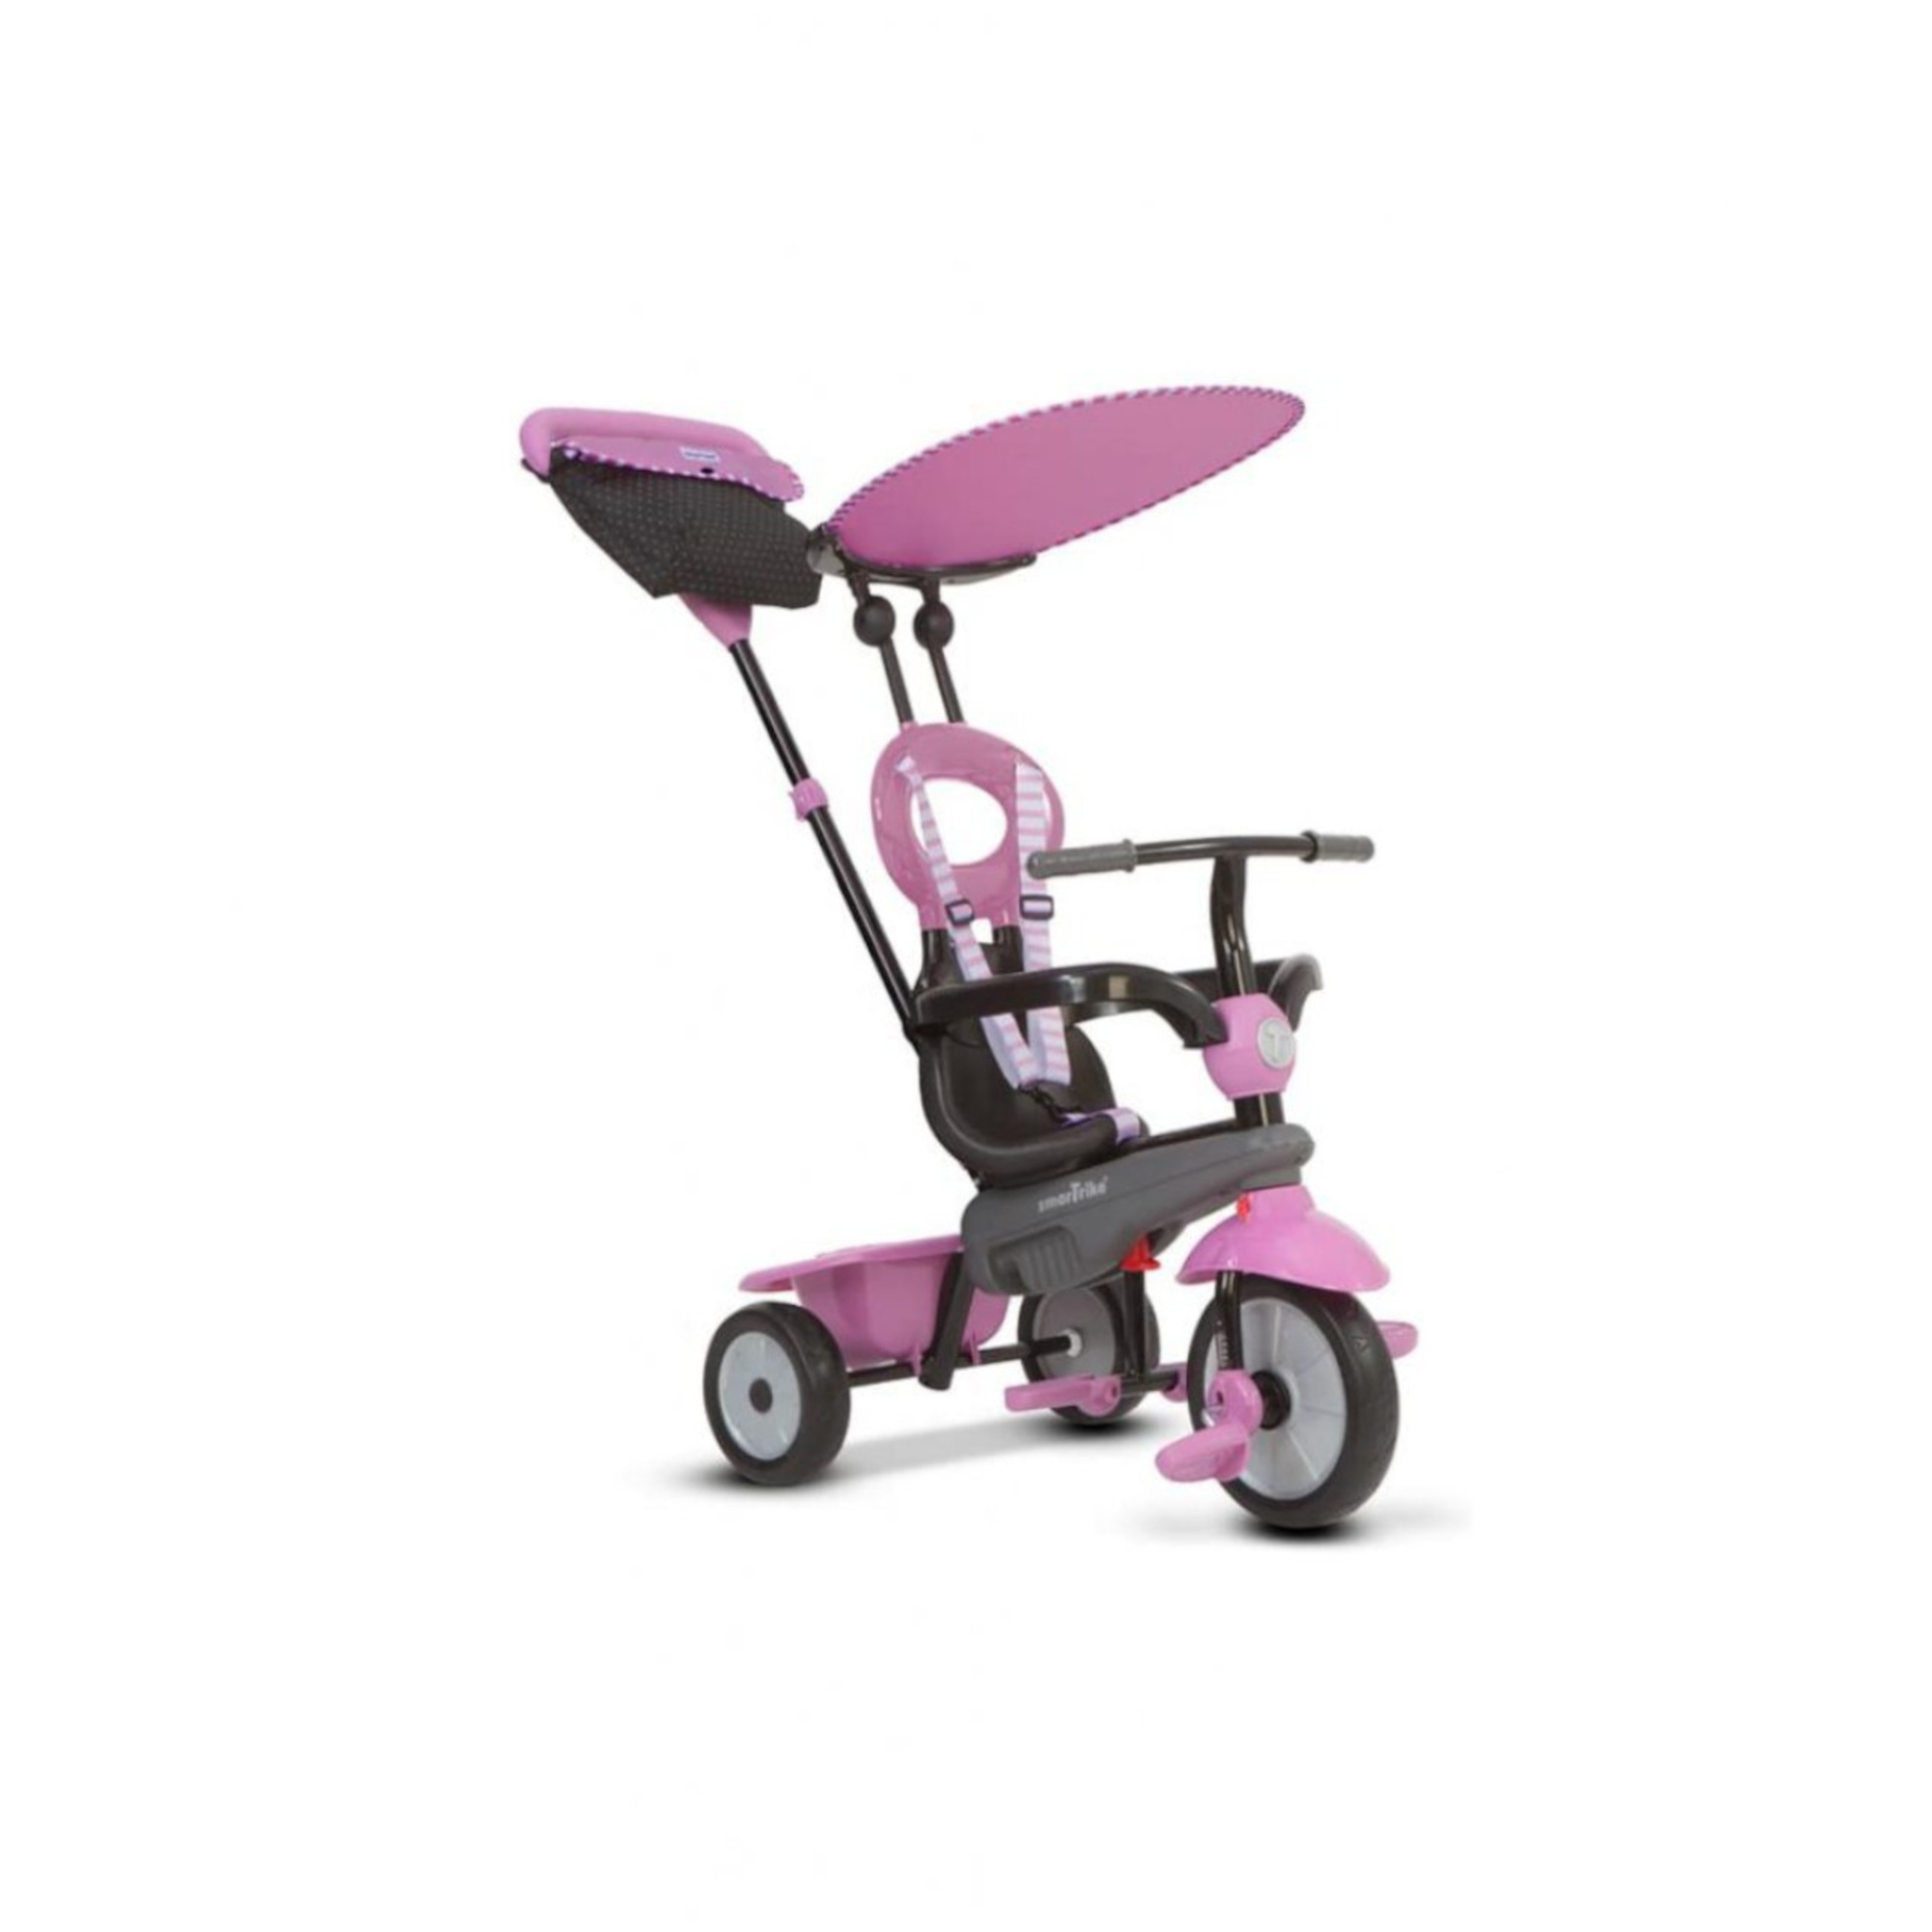 Triciclo 4 in 1 vanilla rosa - smart trike - Baby Smile Original